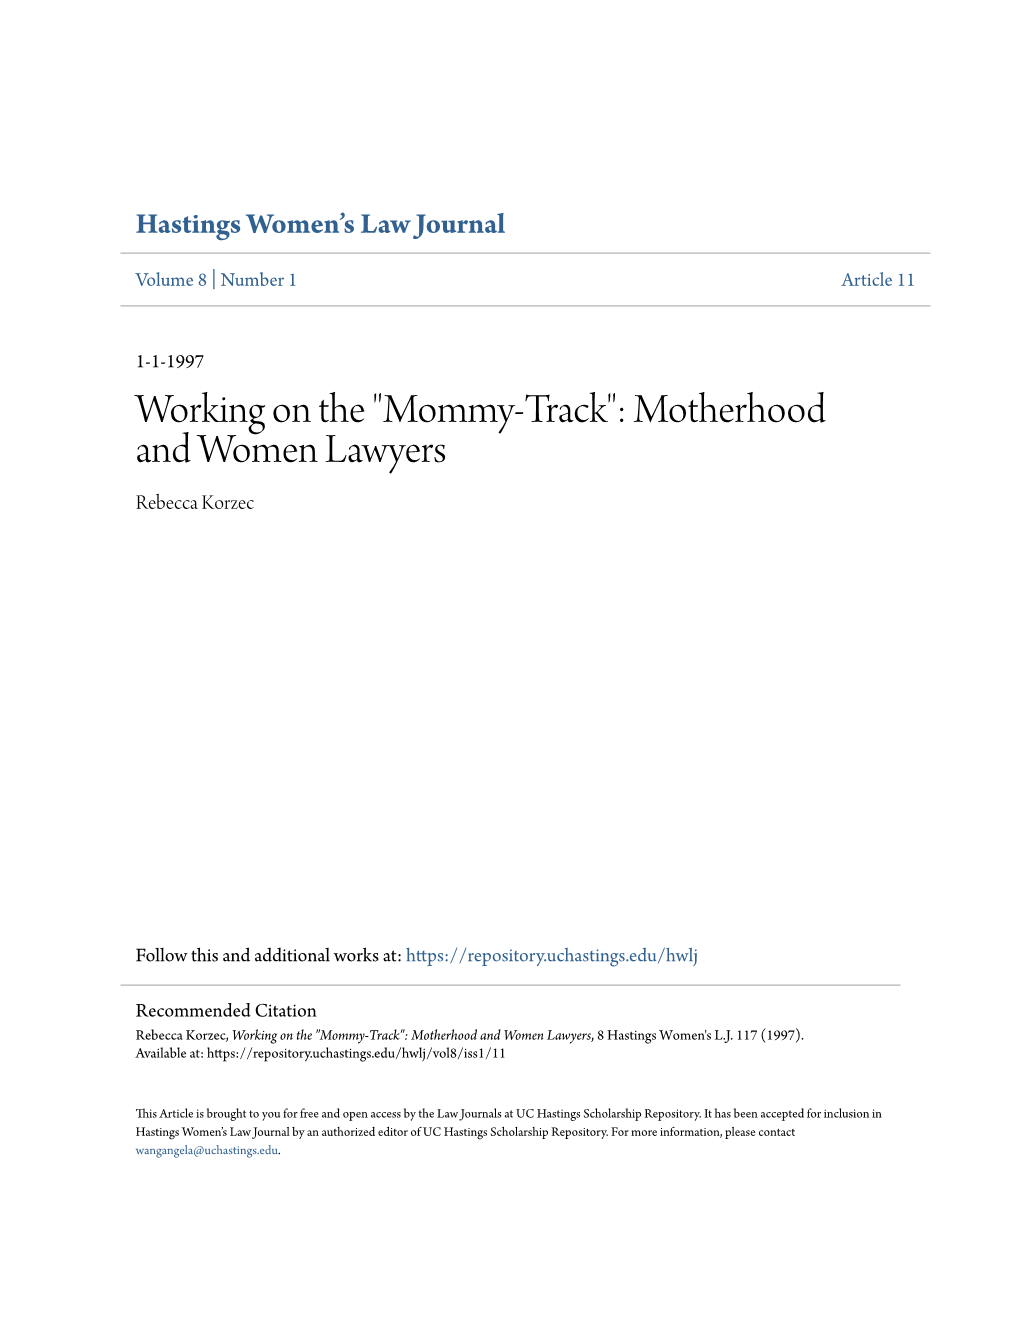 Mommy-Track": Motherhood and Women Lawyers Rebecca Korzec